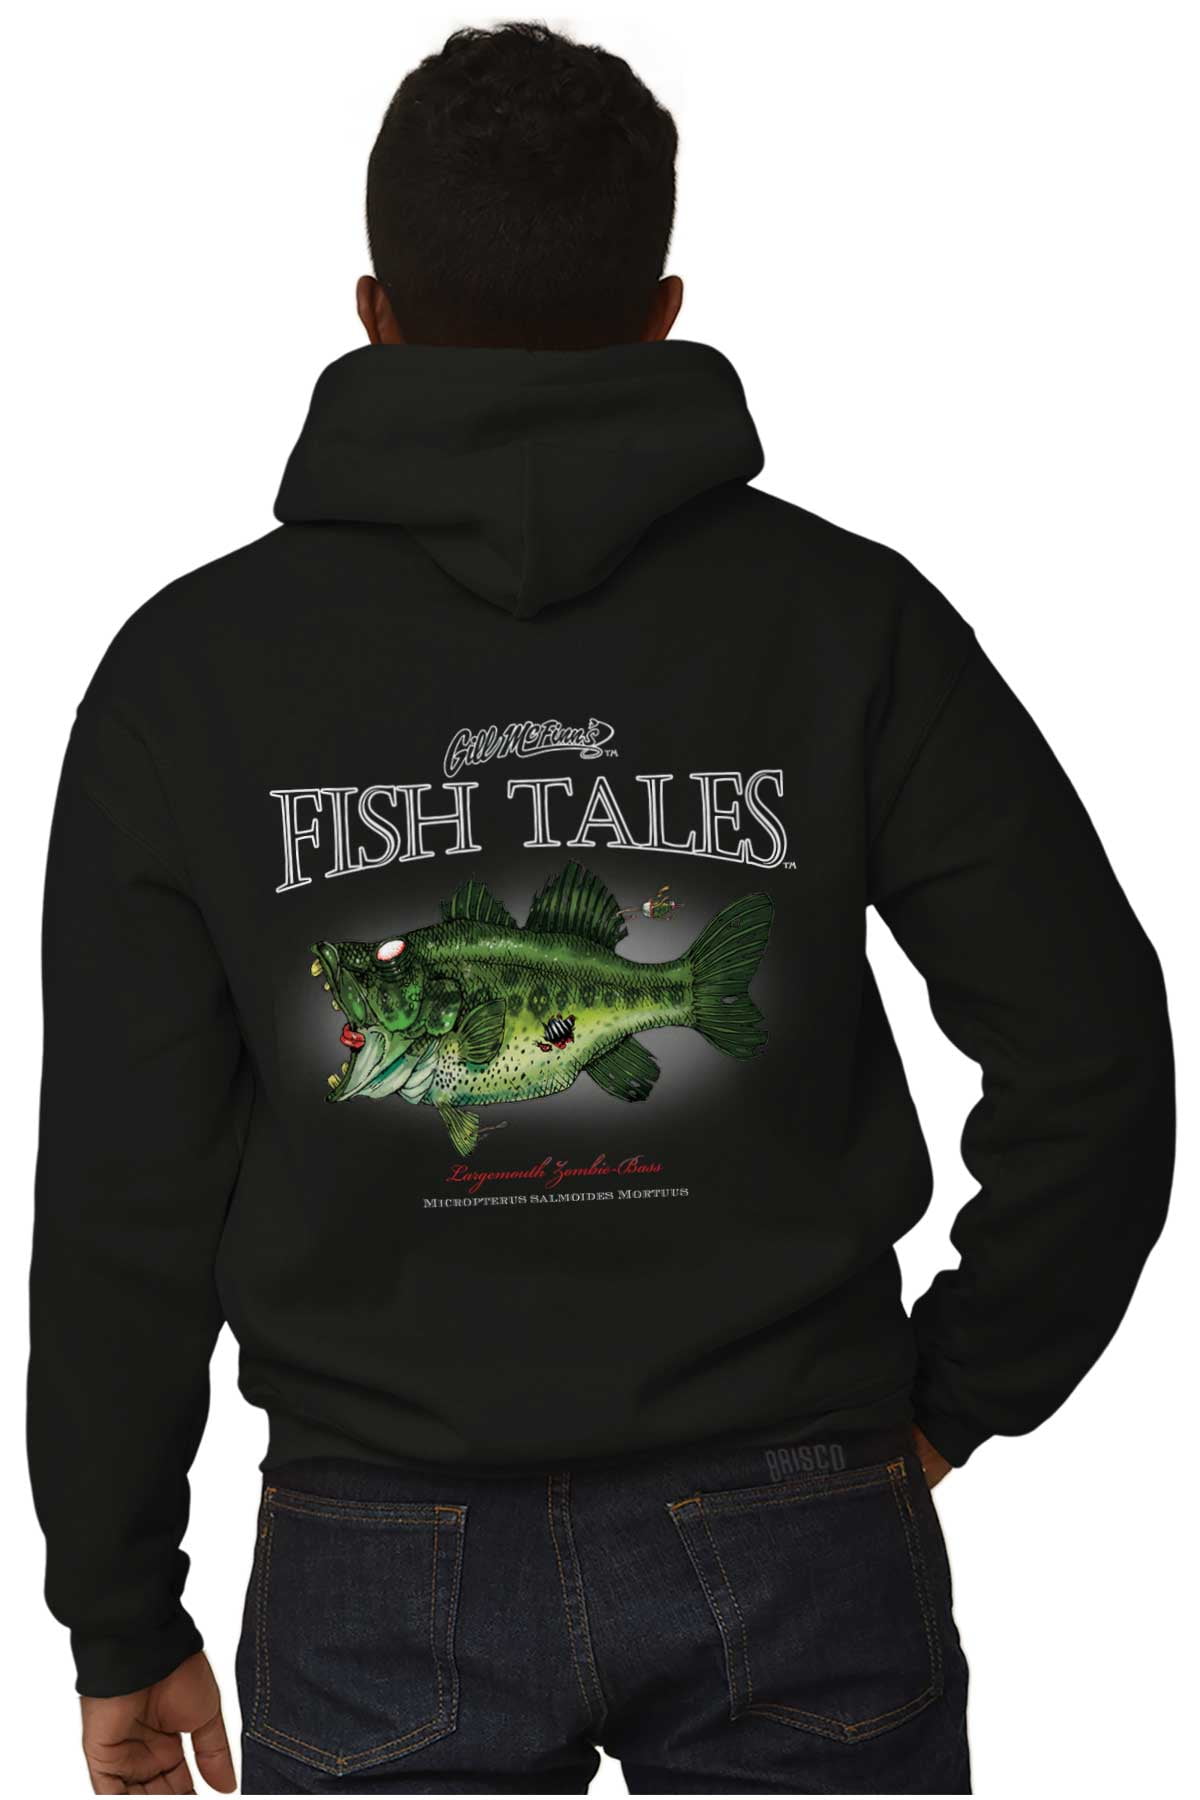 Fish Tales Zombie Bass Fishing Fisher Hoodie Sweatshirt Women Men